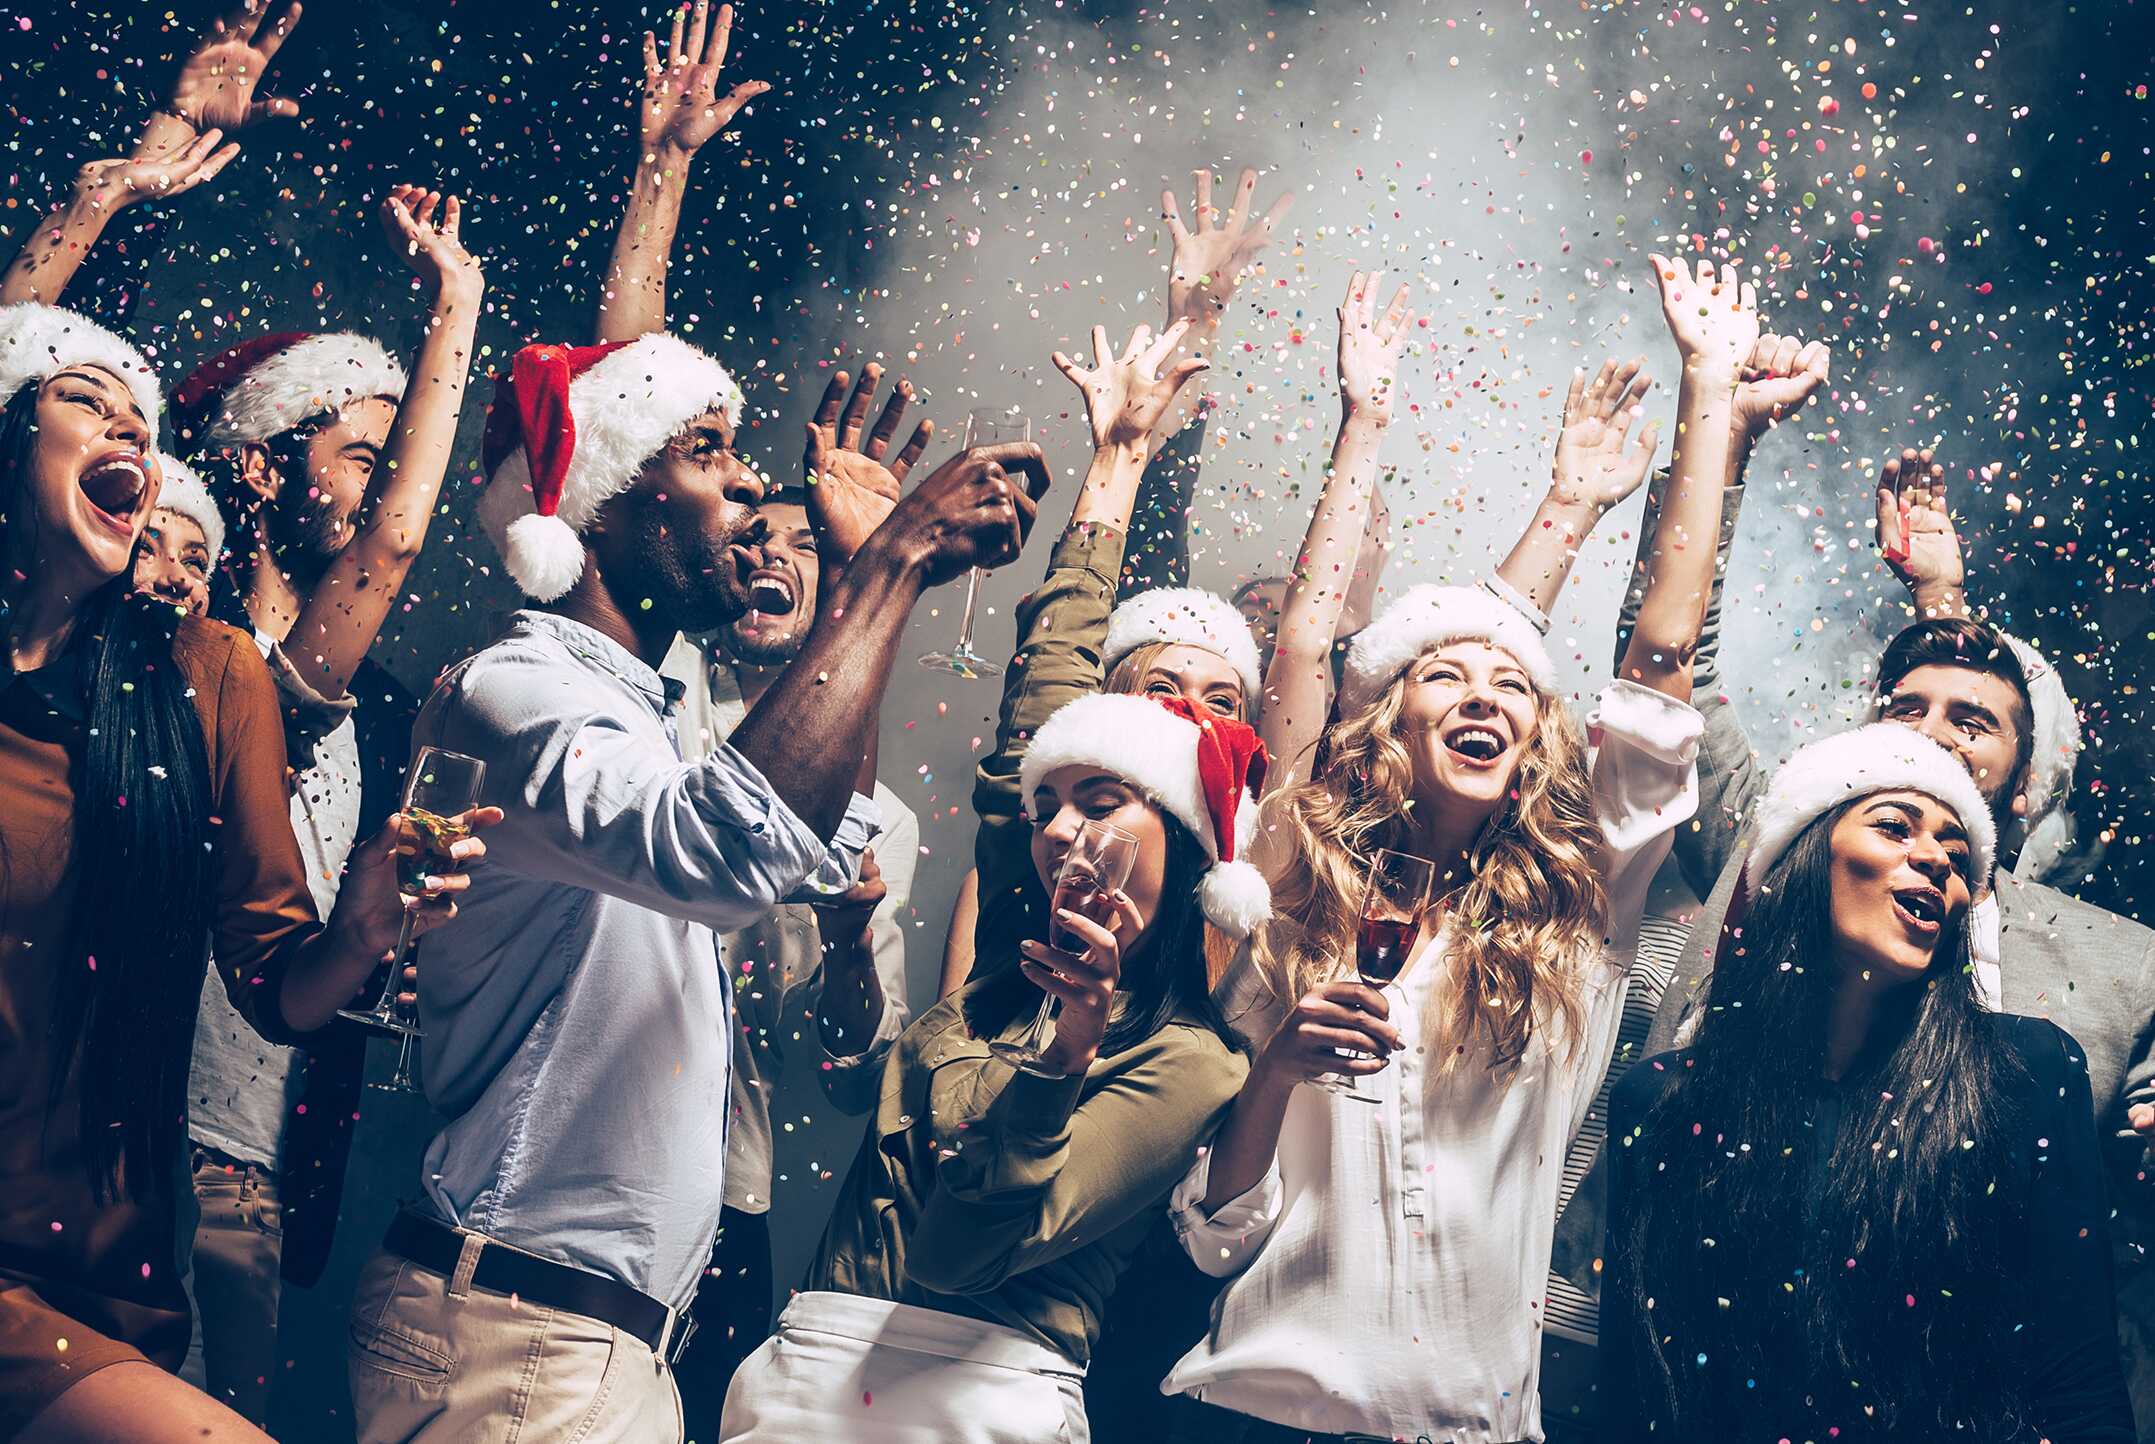 48 Fun Christmas Gift Exchange Ideas & Themes - Play Party Plan